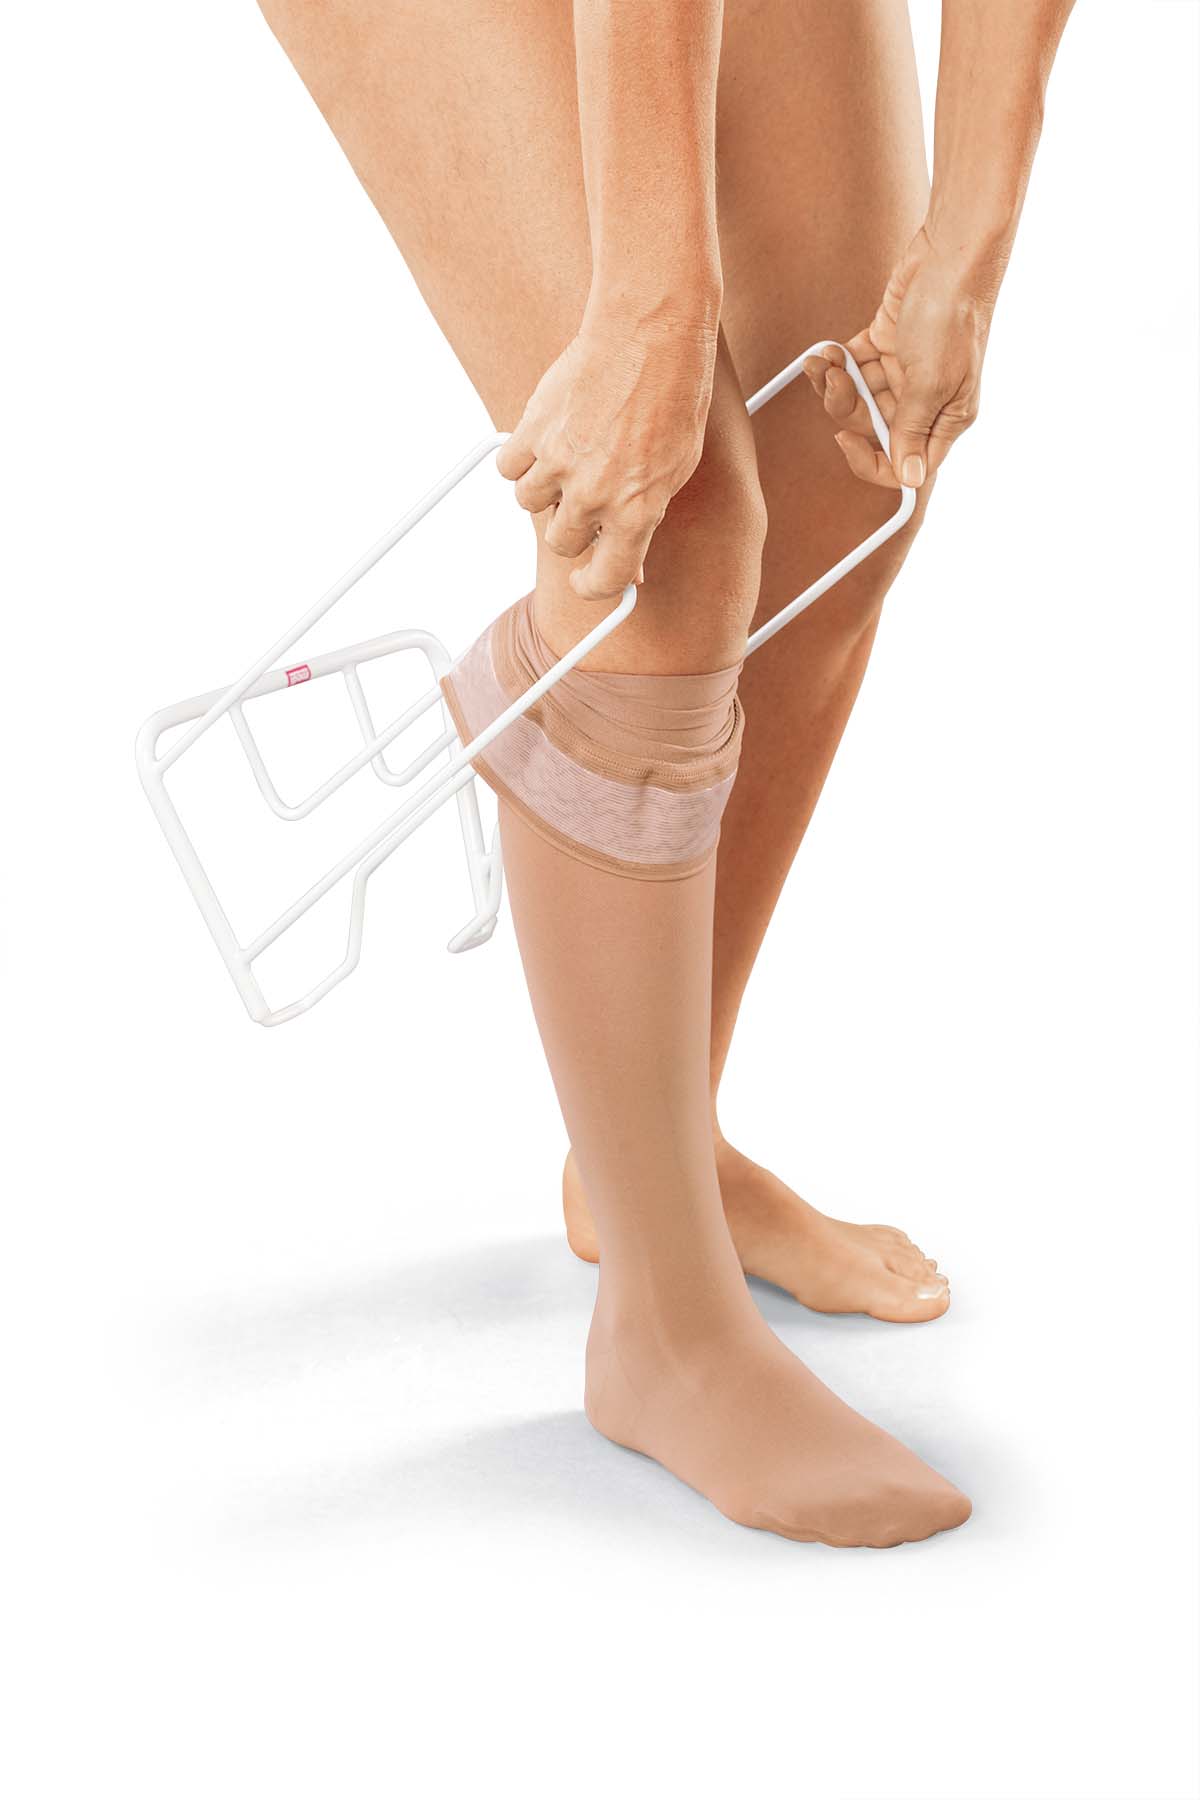 Calzador de Medias de Compresion Panty - Ortopedia 41 - Ortopedia & Deporte